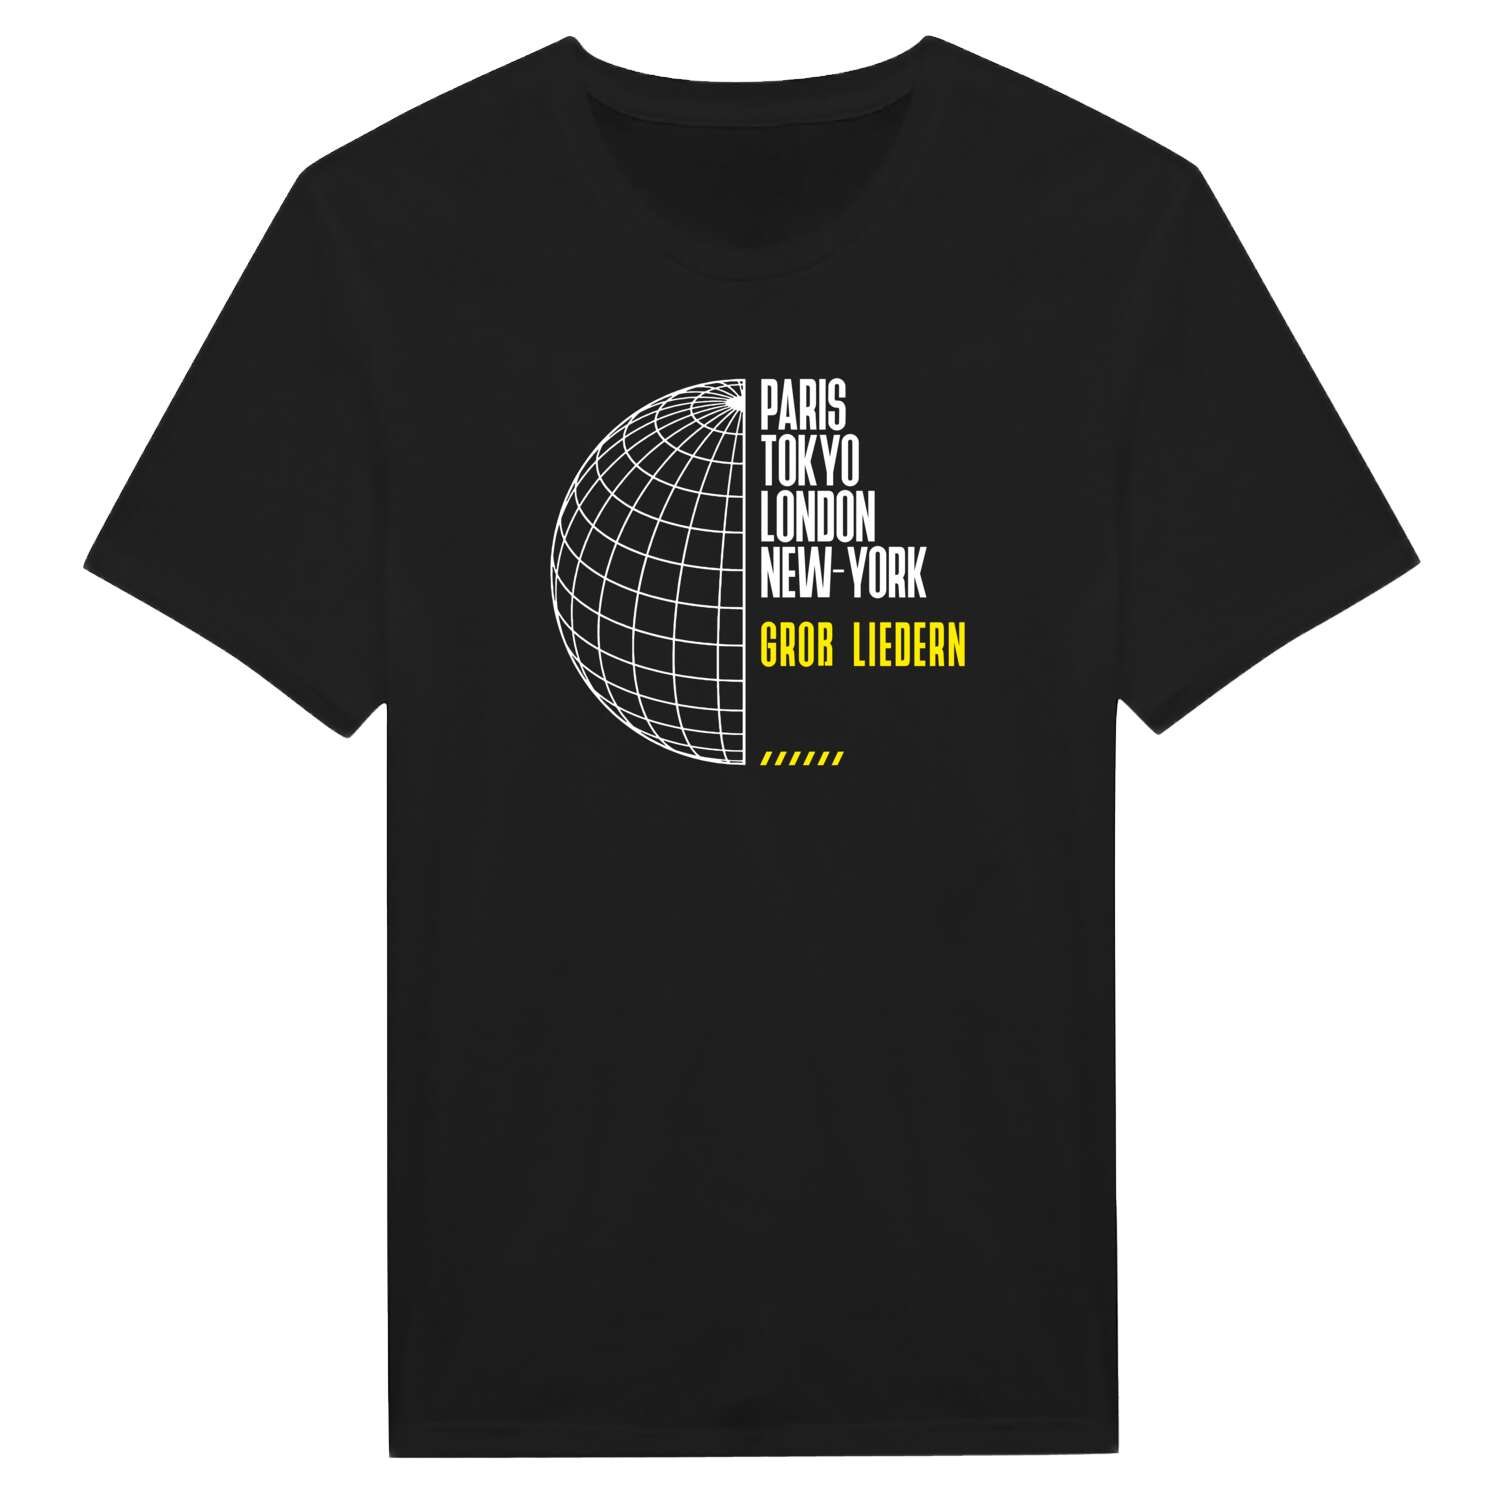 Groß Liedern T-Shirt »Paris Tokyo London«